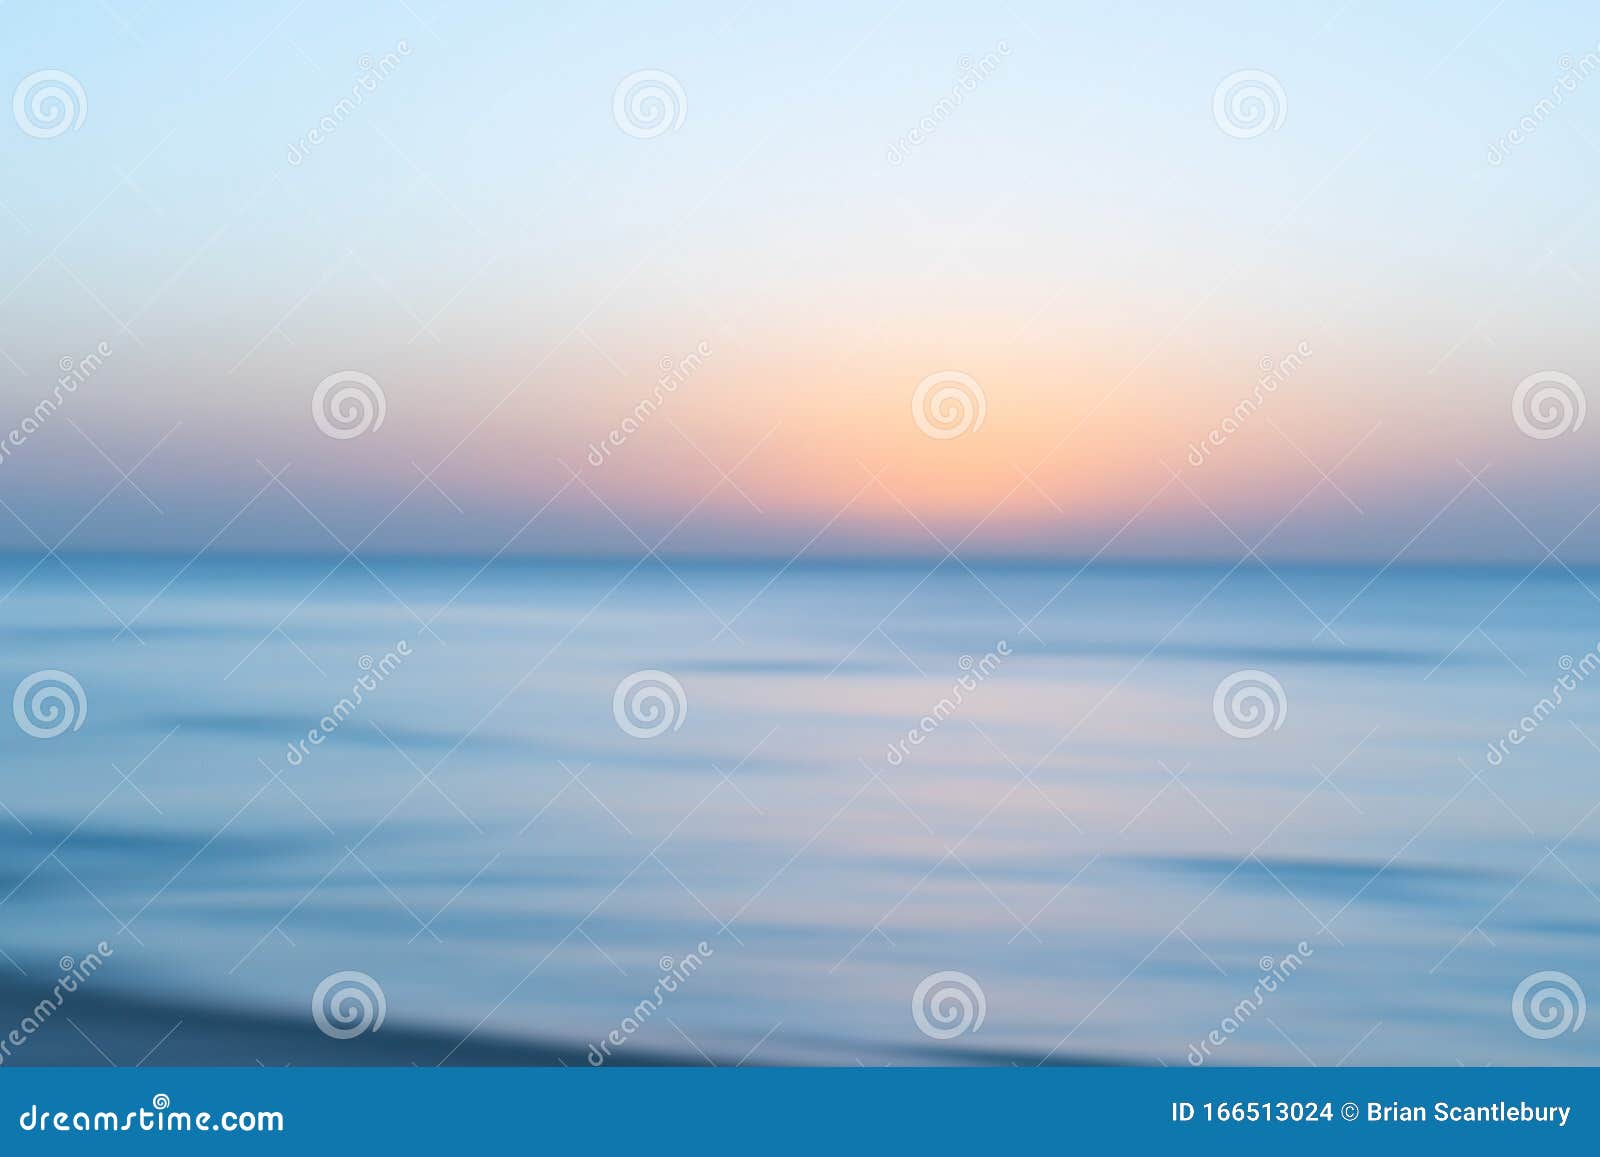 ocean abstract blur